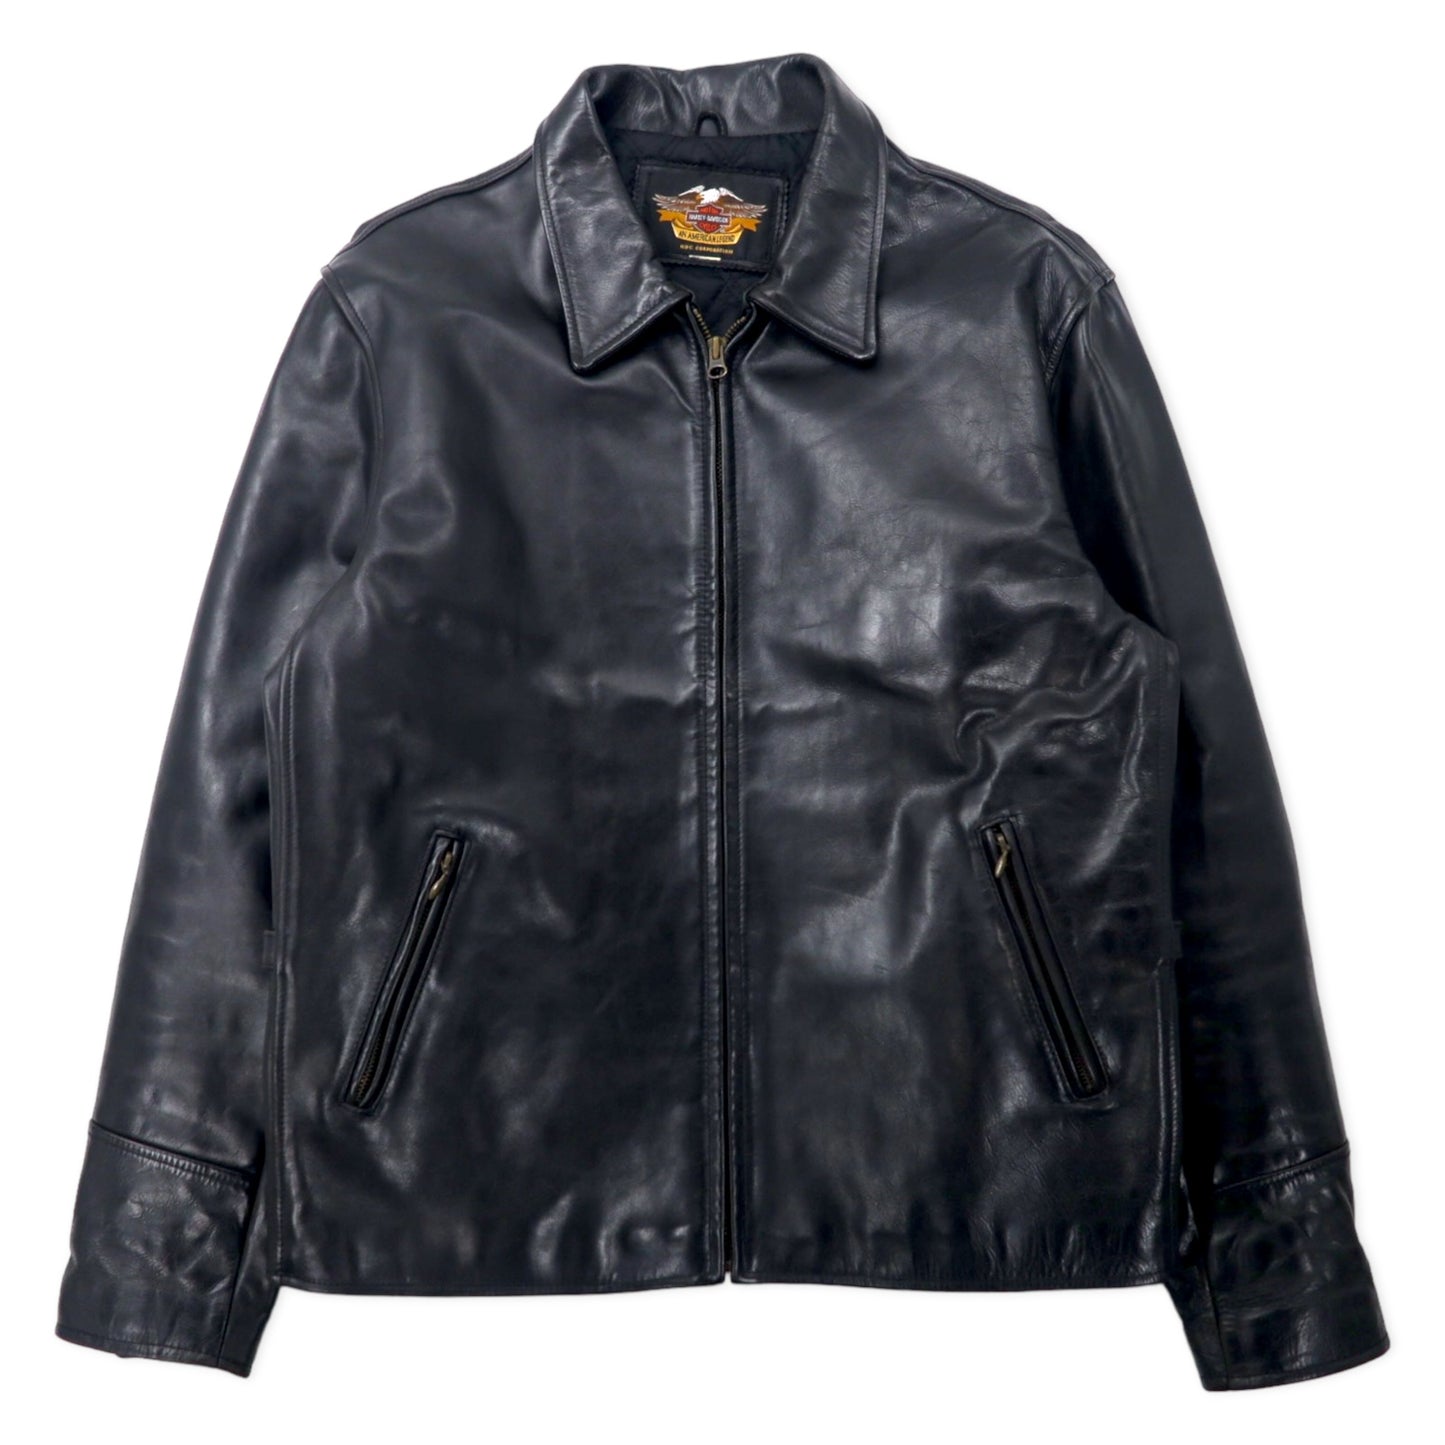 Harley Davidson Single Riders Jacket Leather Jacket L Black ...